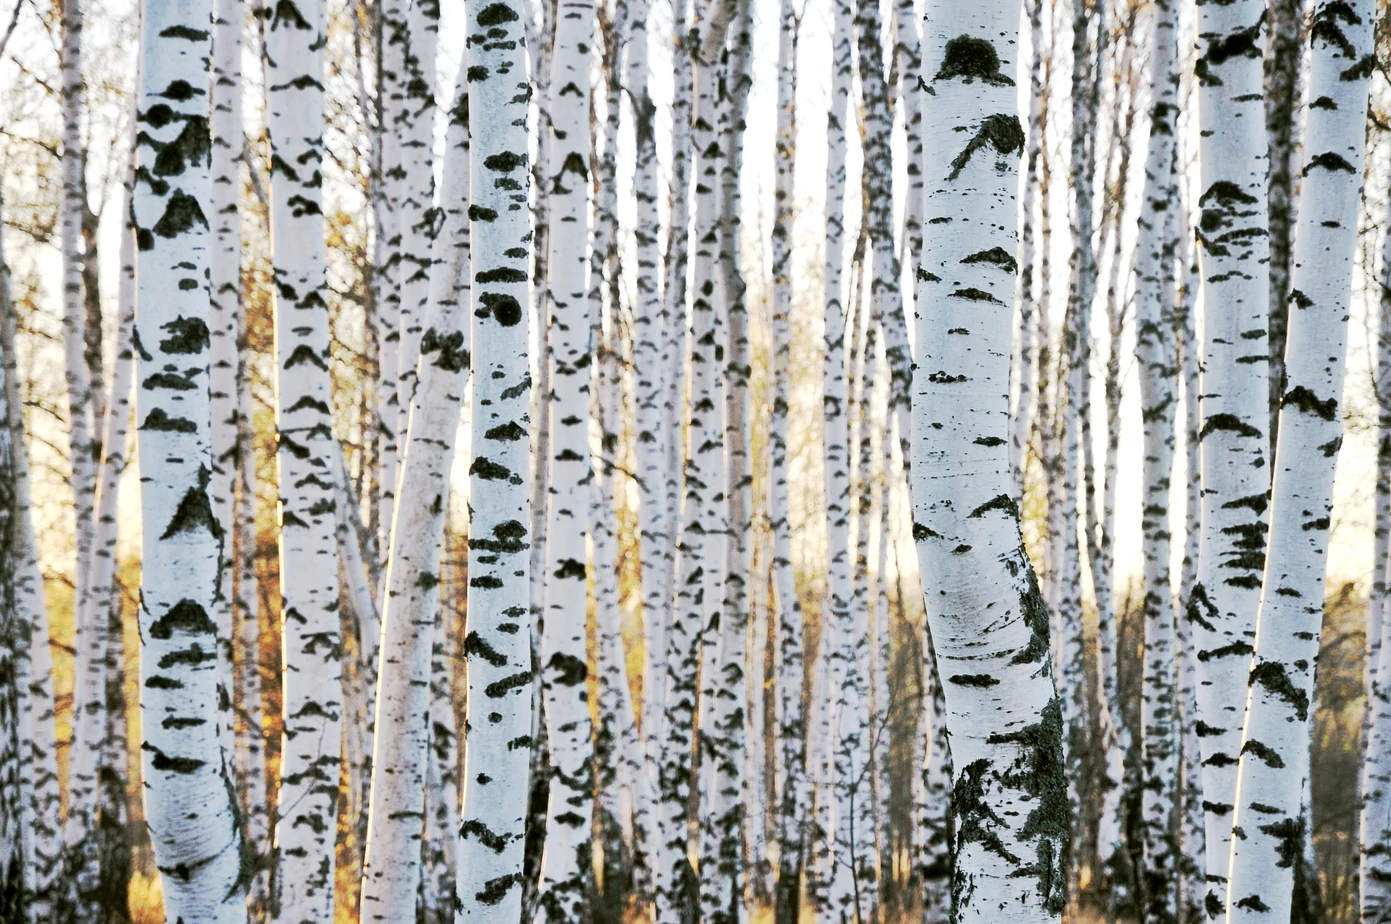 Birch tree – the colorfast bark